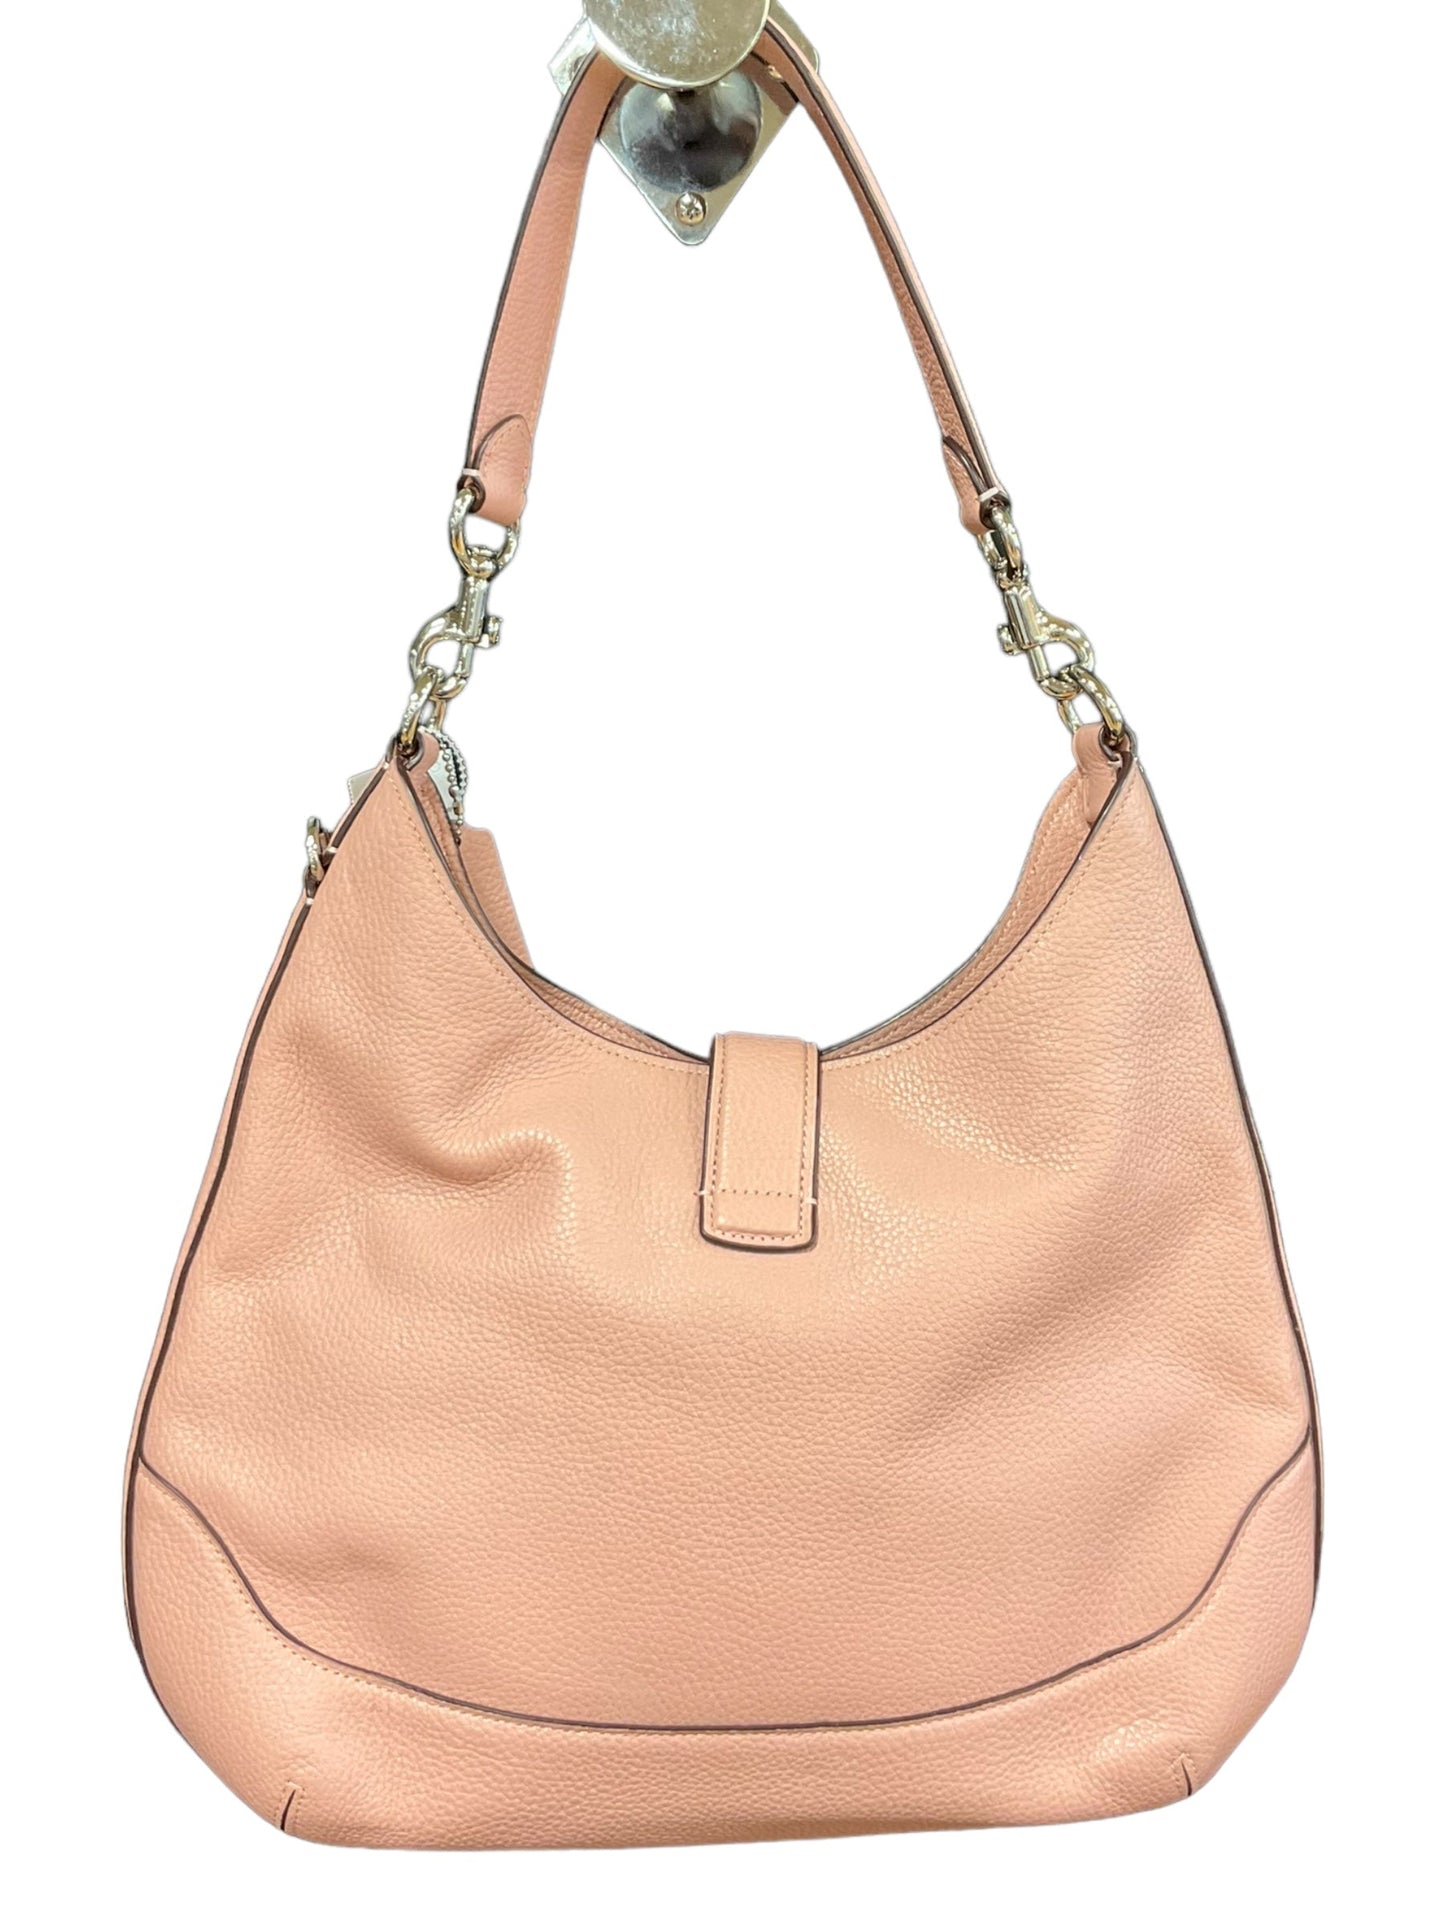 Handbag Leather By Coach  Size: Medium